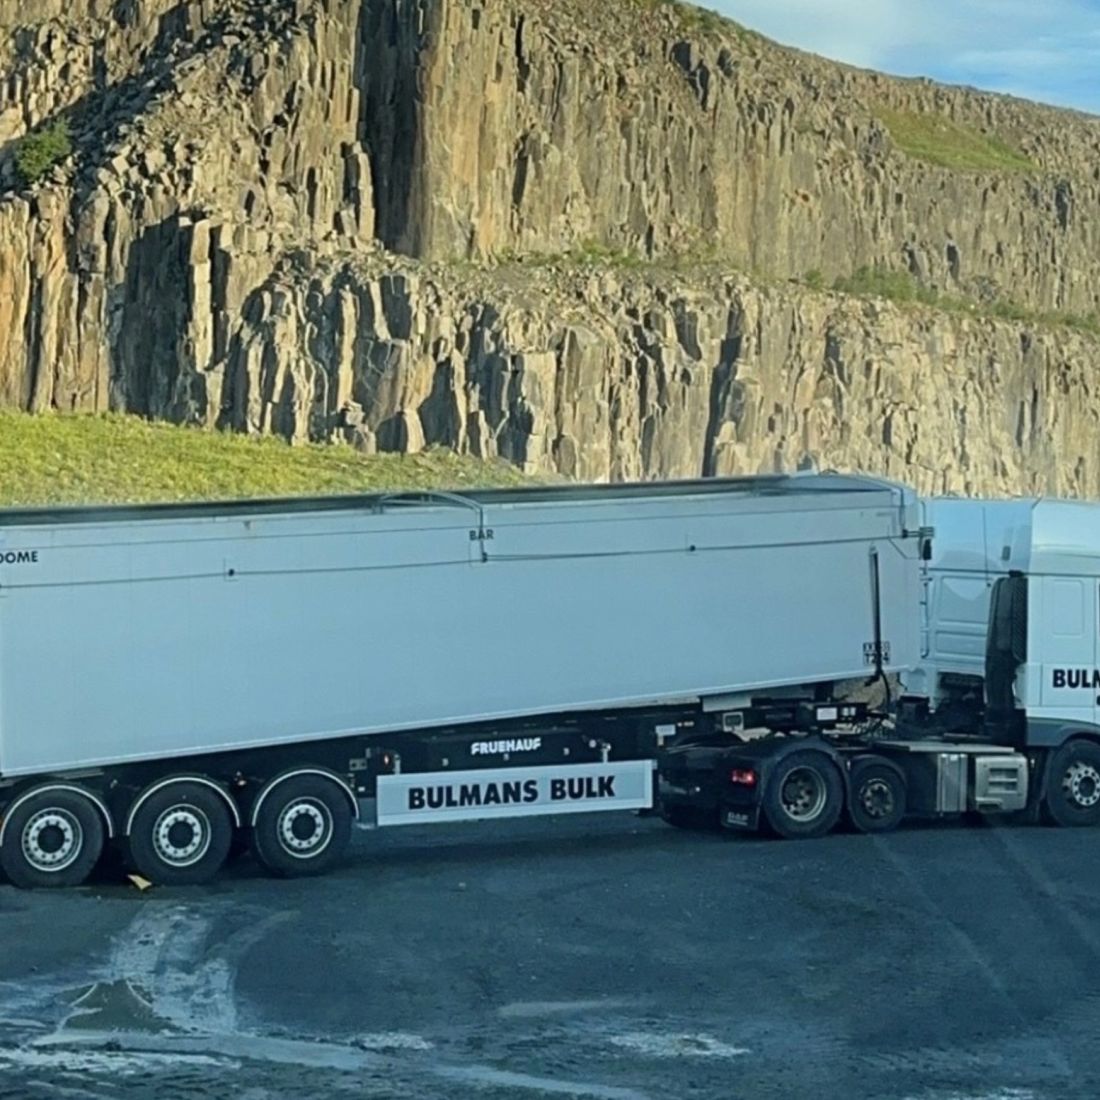 A Bulmans Bulk Haulage truck in a quarry setting.